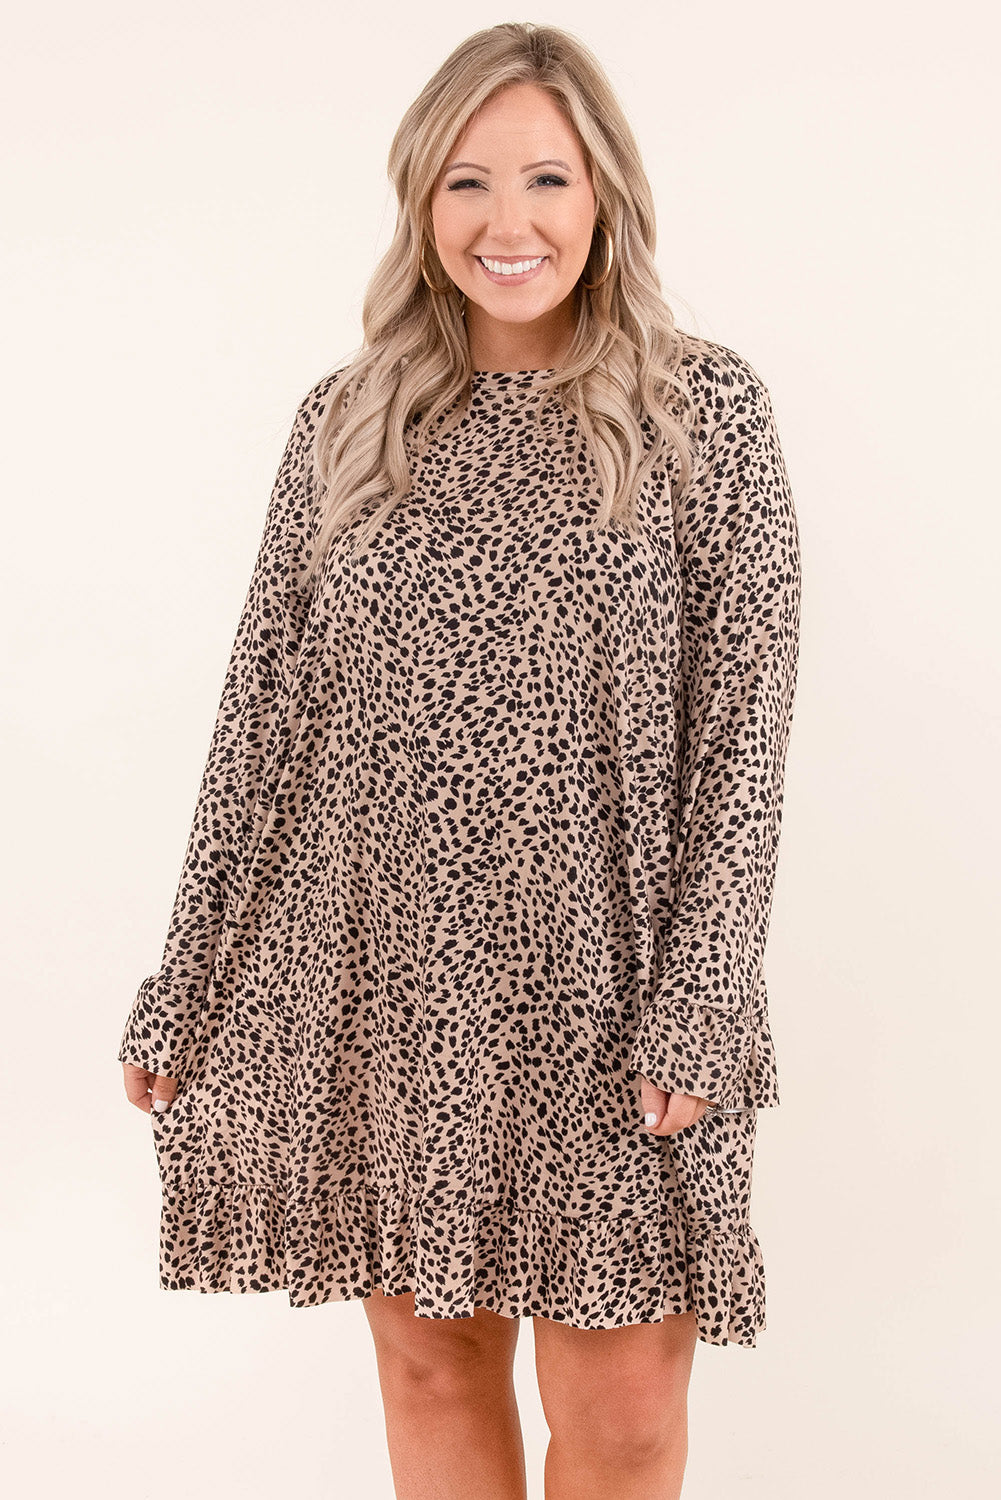 Leopard Plus Size Ruffle Long Sleeve Mini Dress